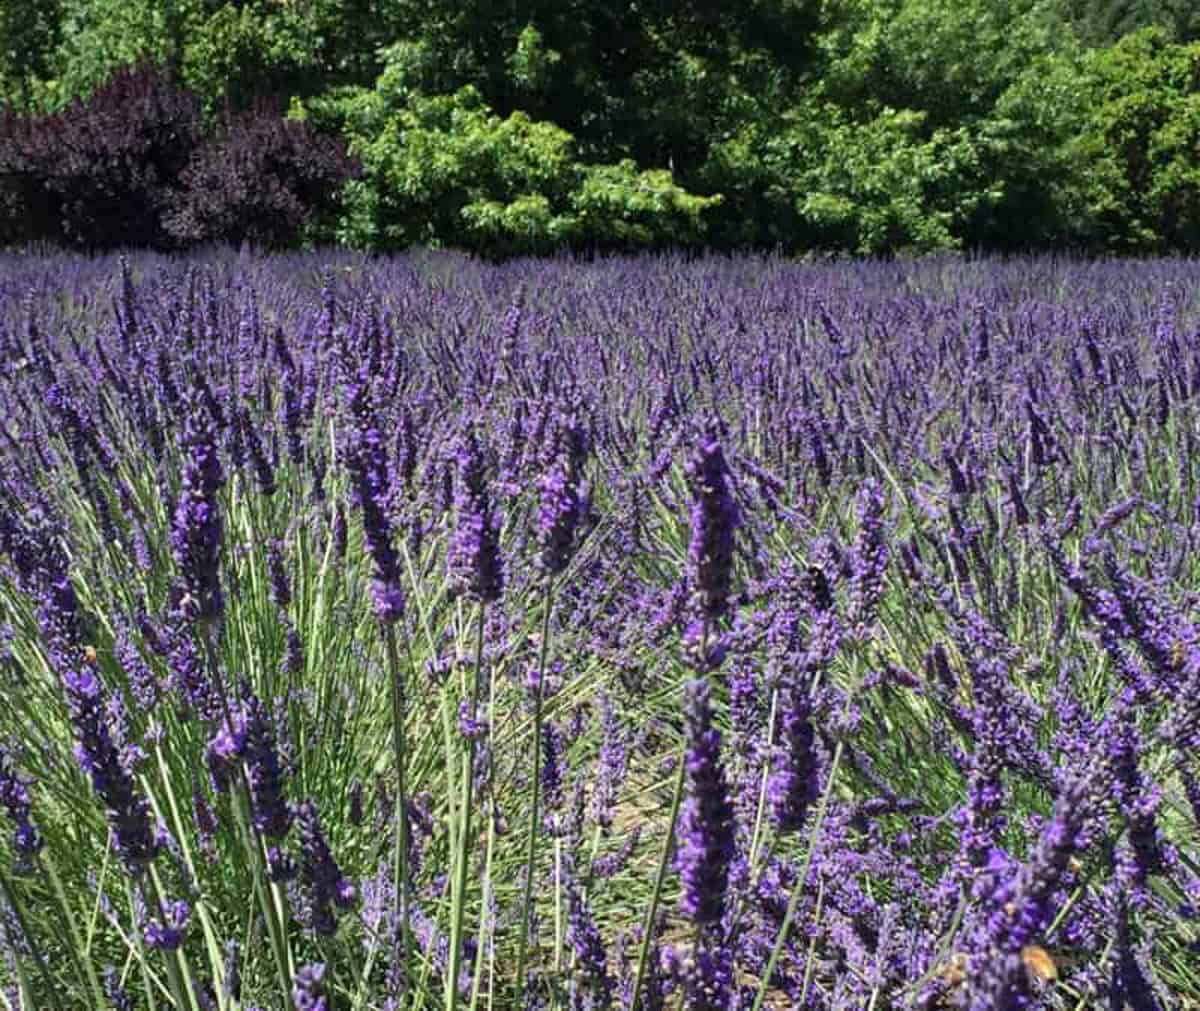 Lavender in bloom in May in Sonoma County